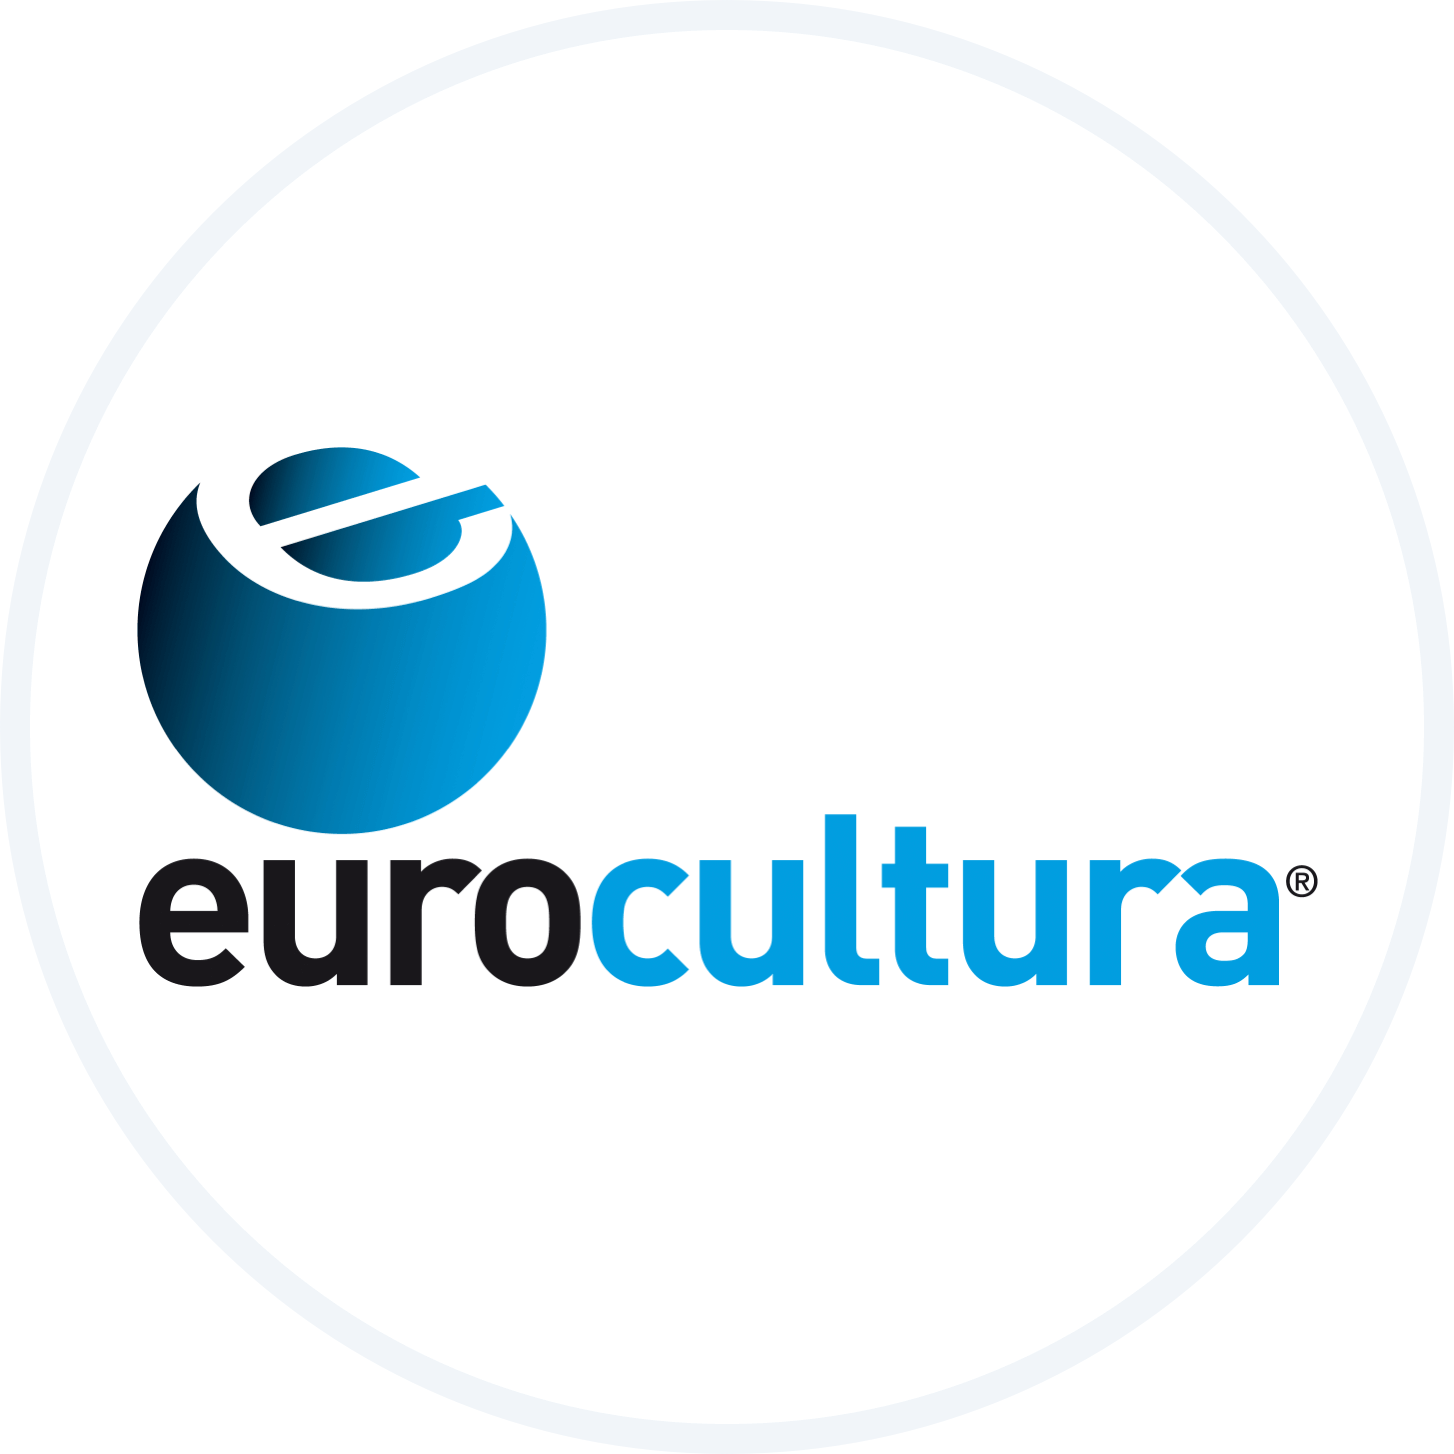 Eurocultura Logoo (1)